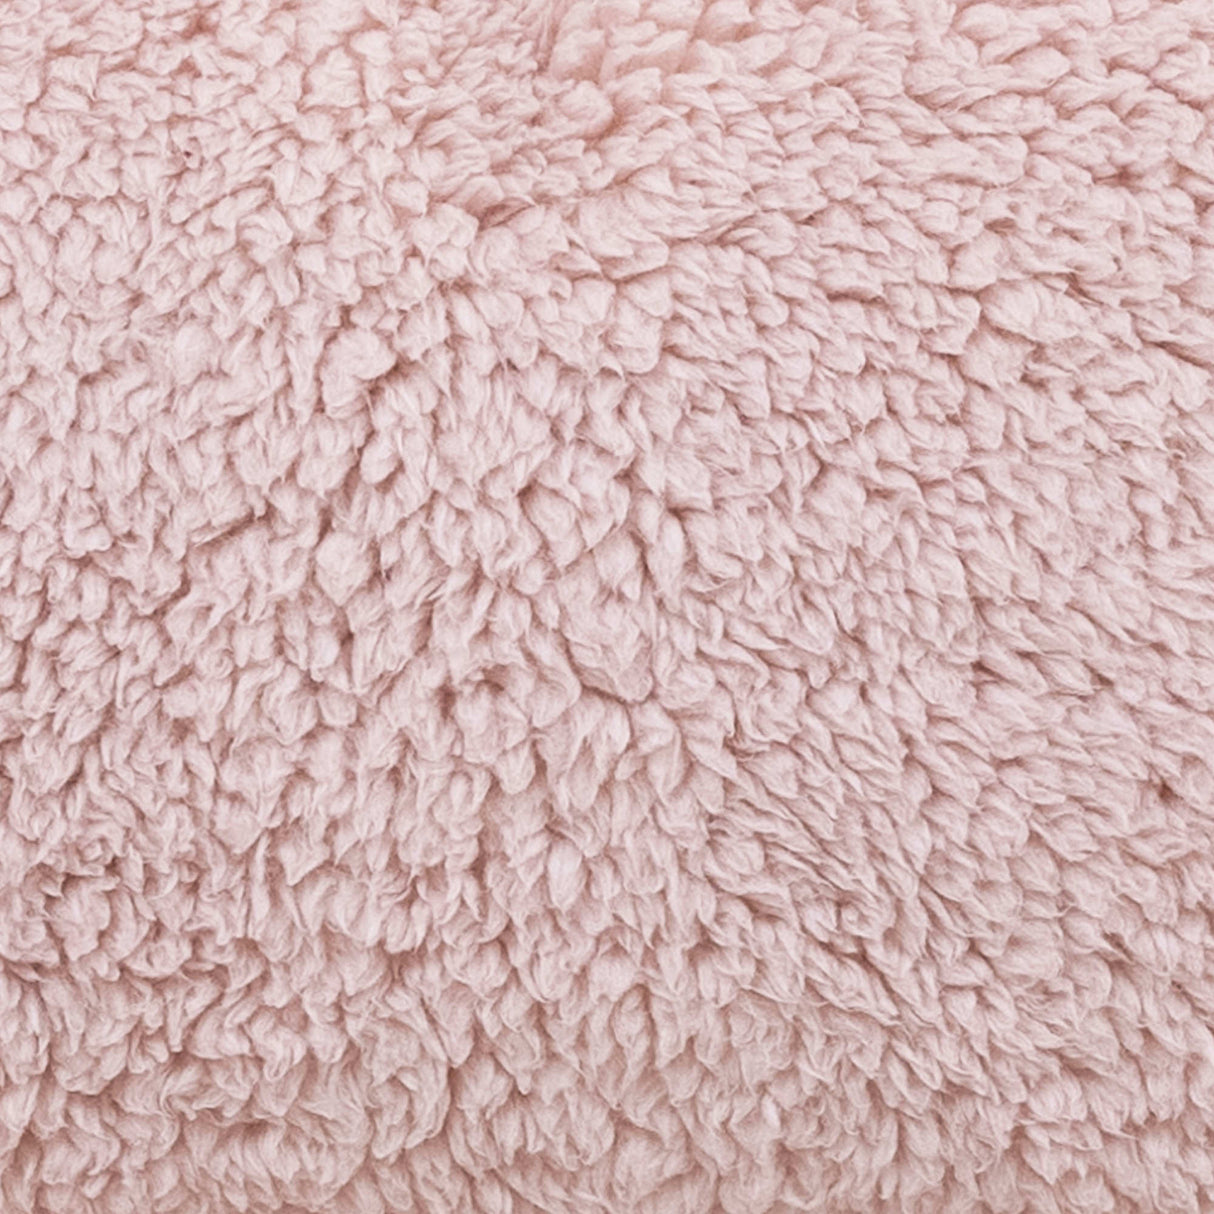 Fleece Support Pillow (Cuddle Cushion) - Pink